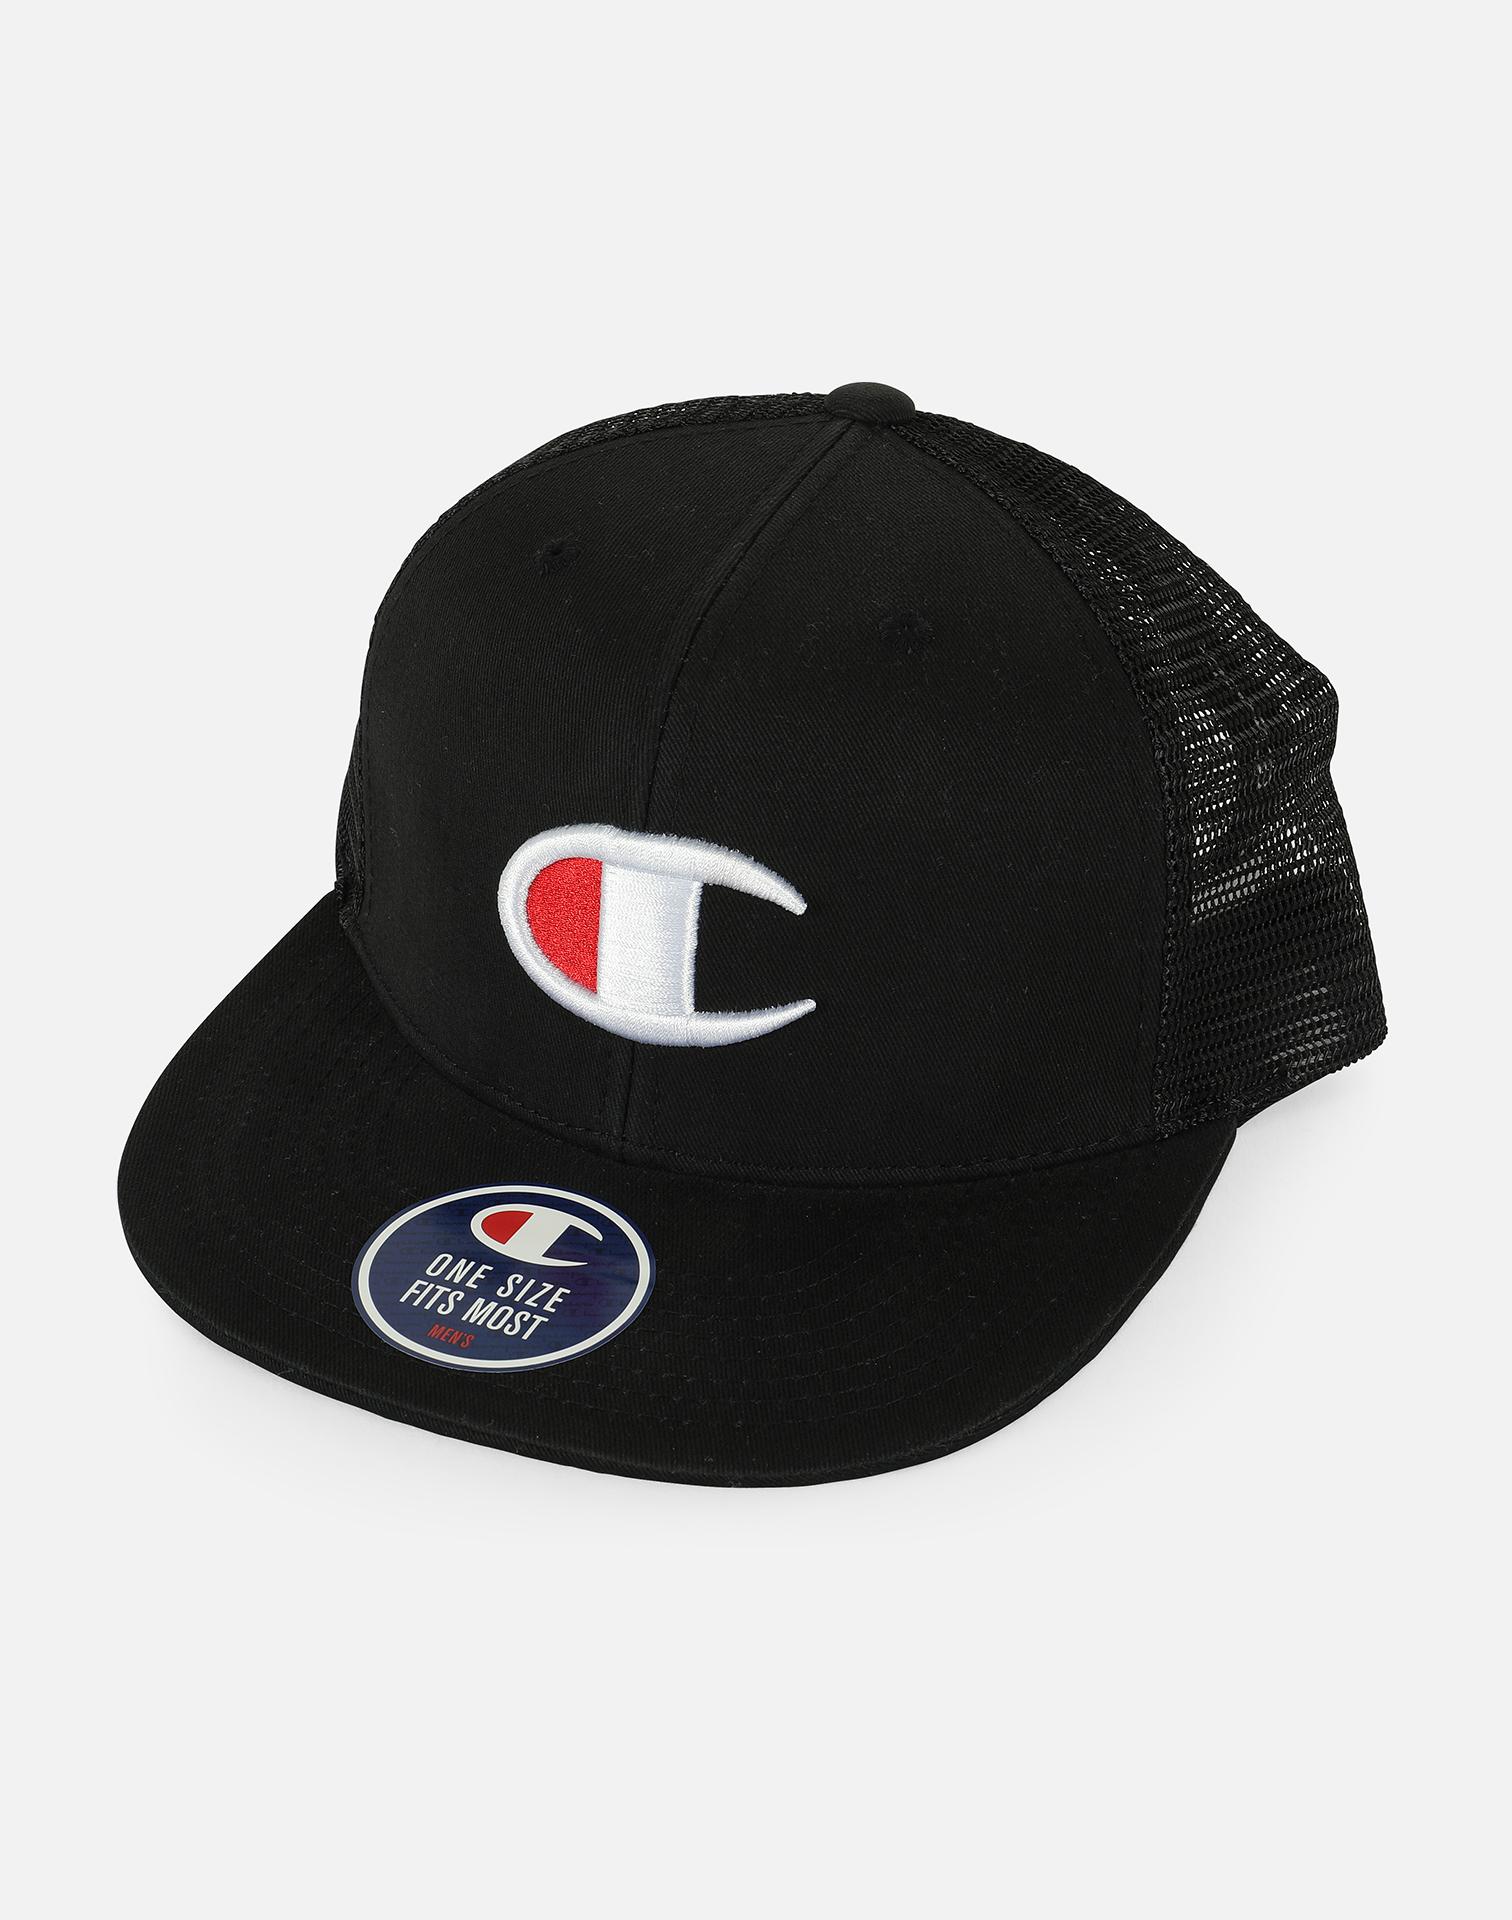 Champion Synthetic Big C Logo Mesh Snapback Hat in Black for Men - Lyst